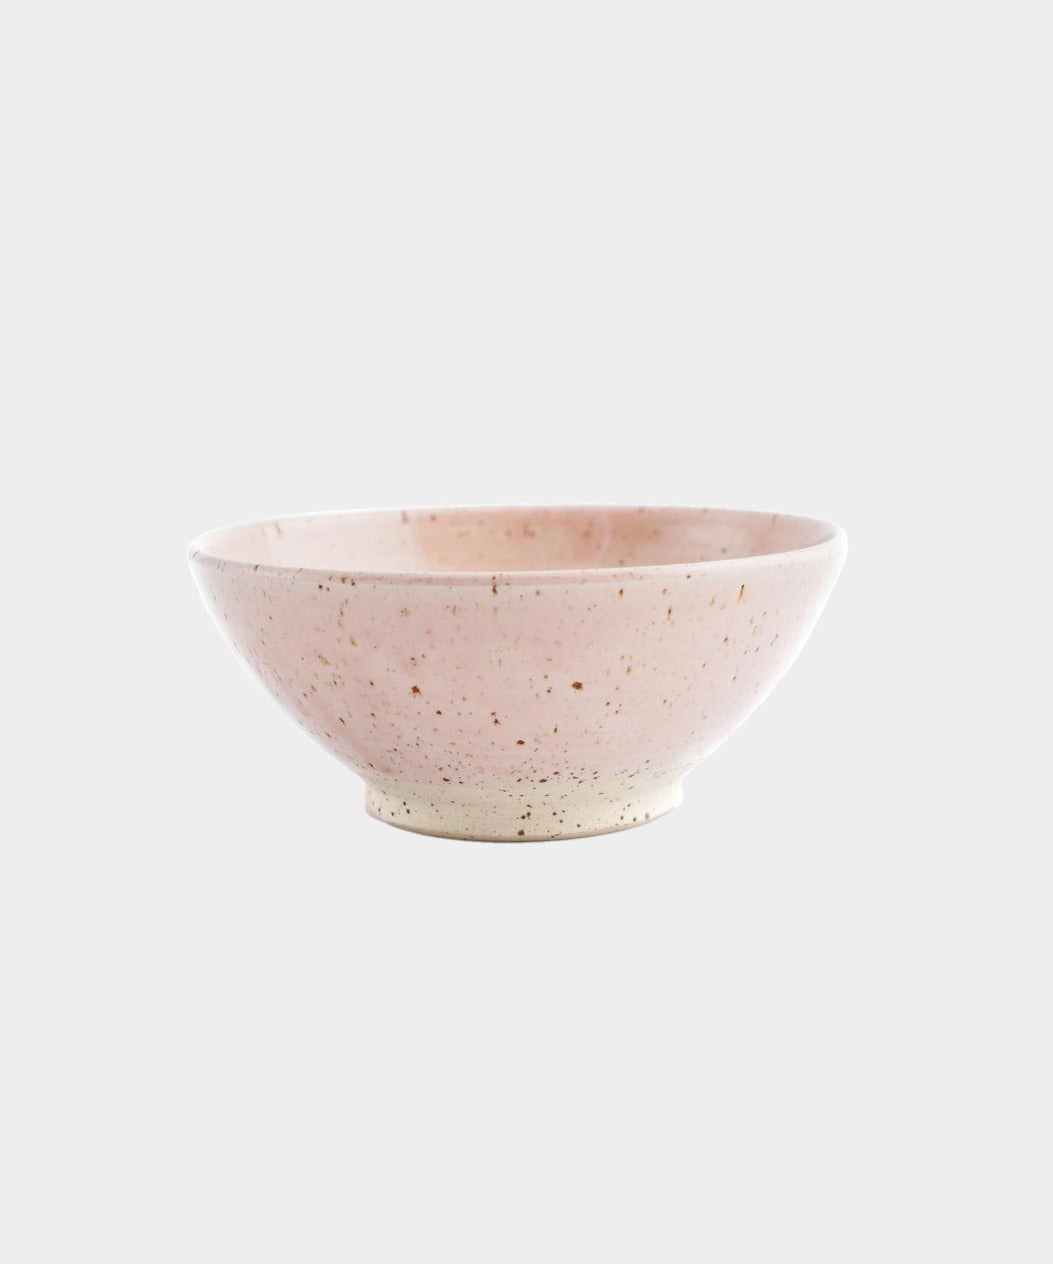 Håndlavet Keramik morgenmadstallerken | FLORAL by Vang | Kerama